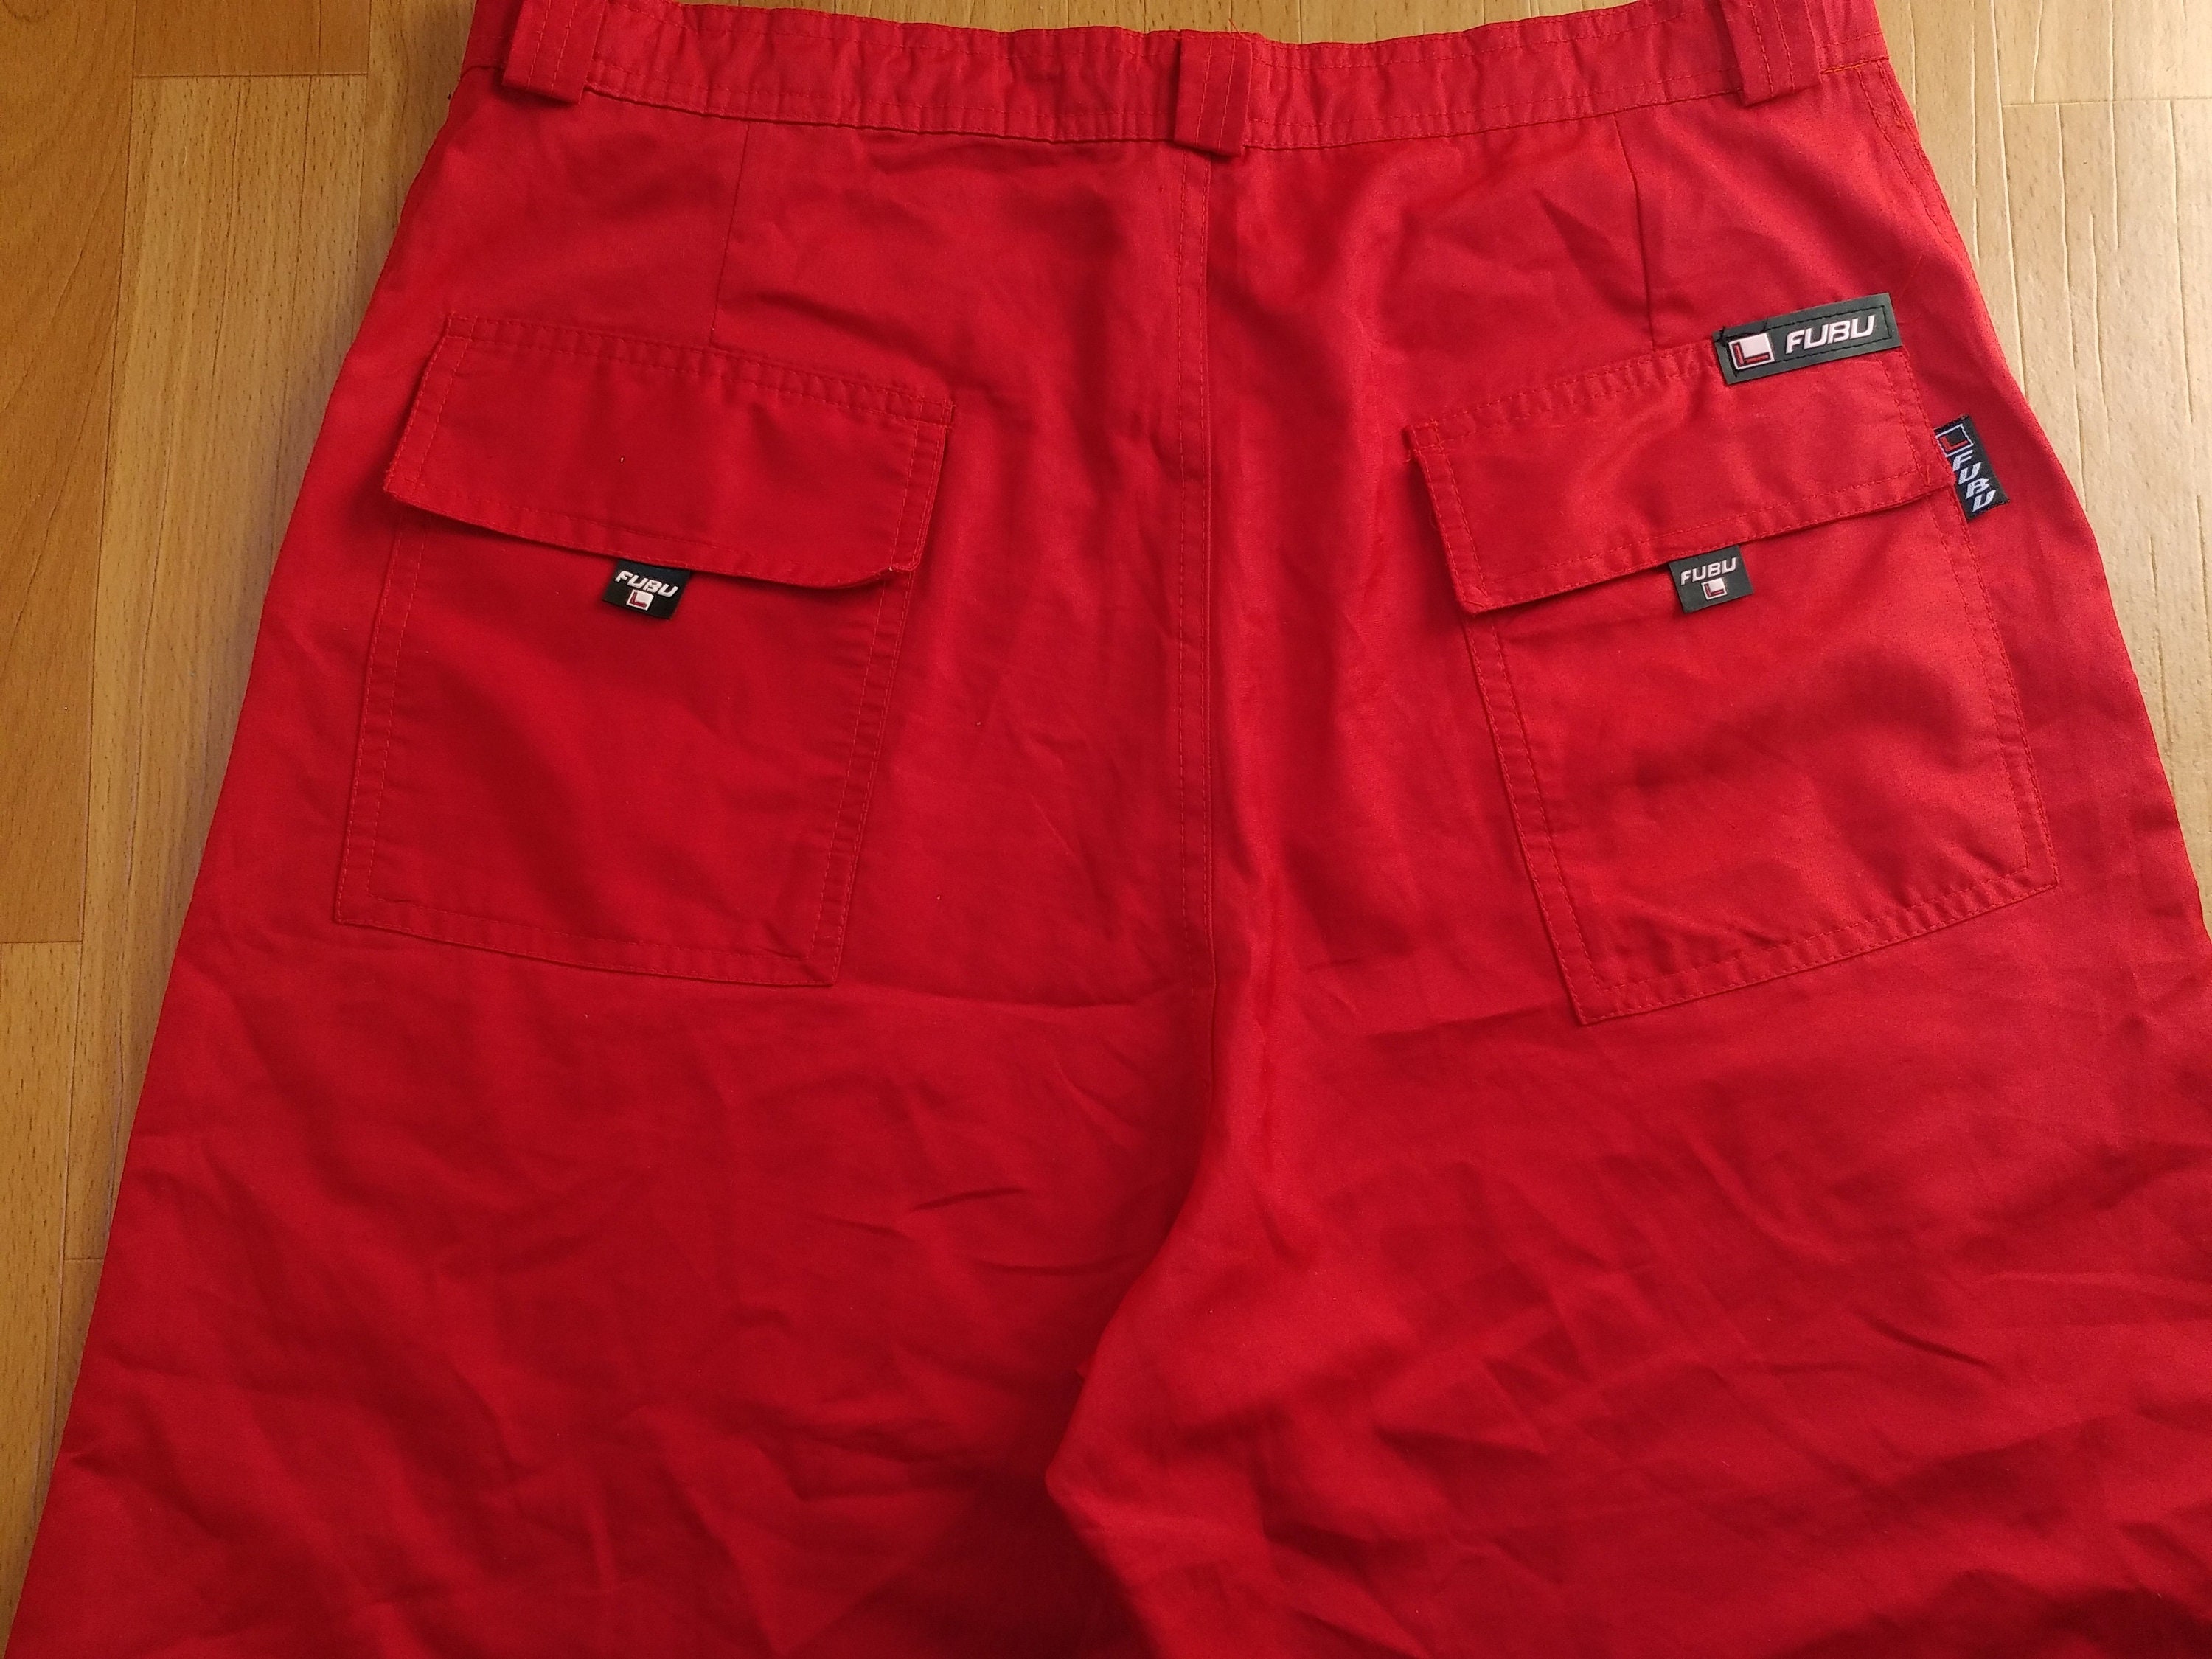 FUBU shorts red vintage Fubu jeans shorts 90s hip hop | Etsy